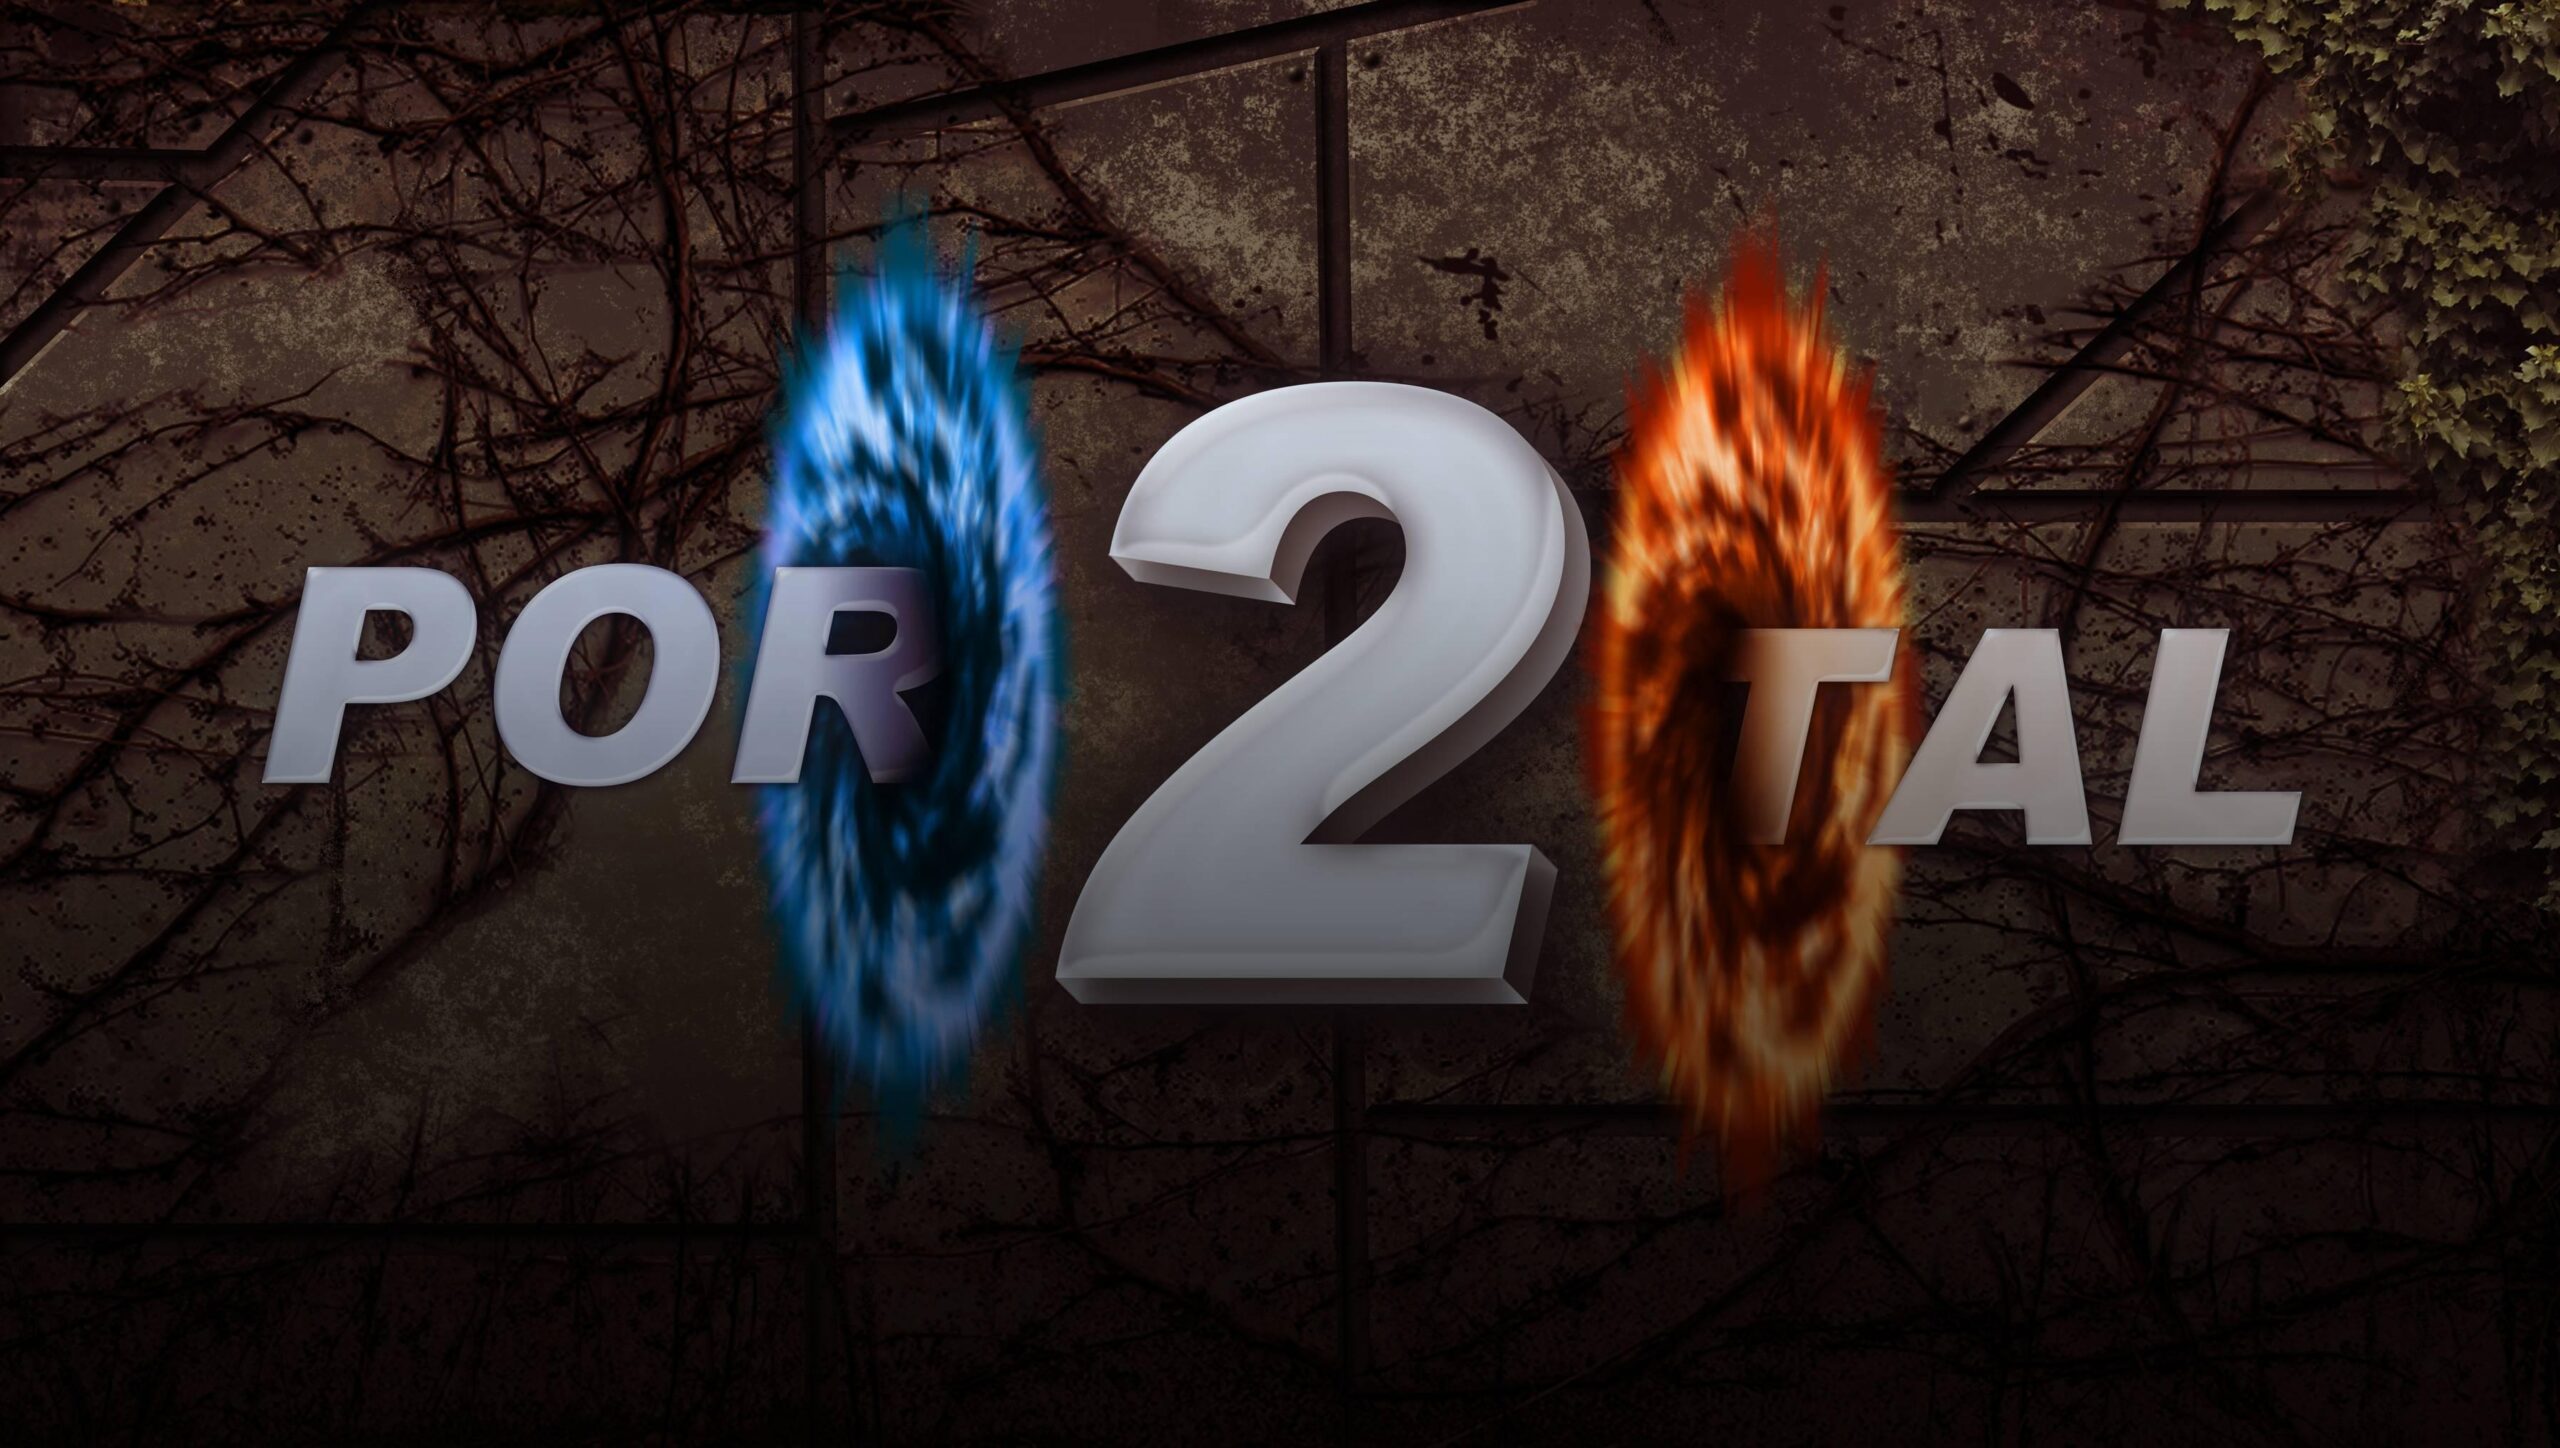 Portal 2 Best Wallpaper Hd, Portal 2, Game